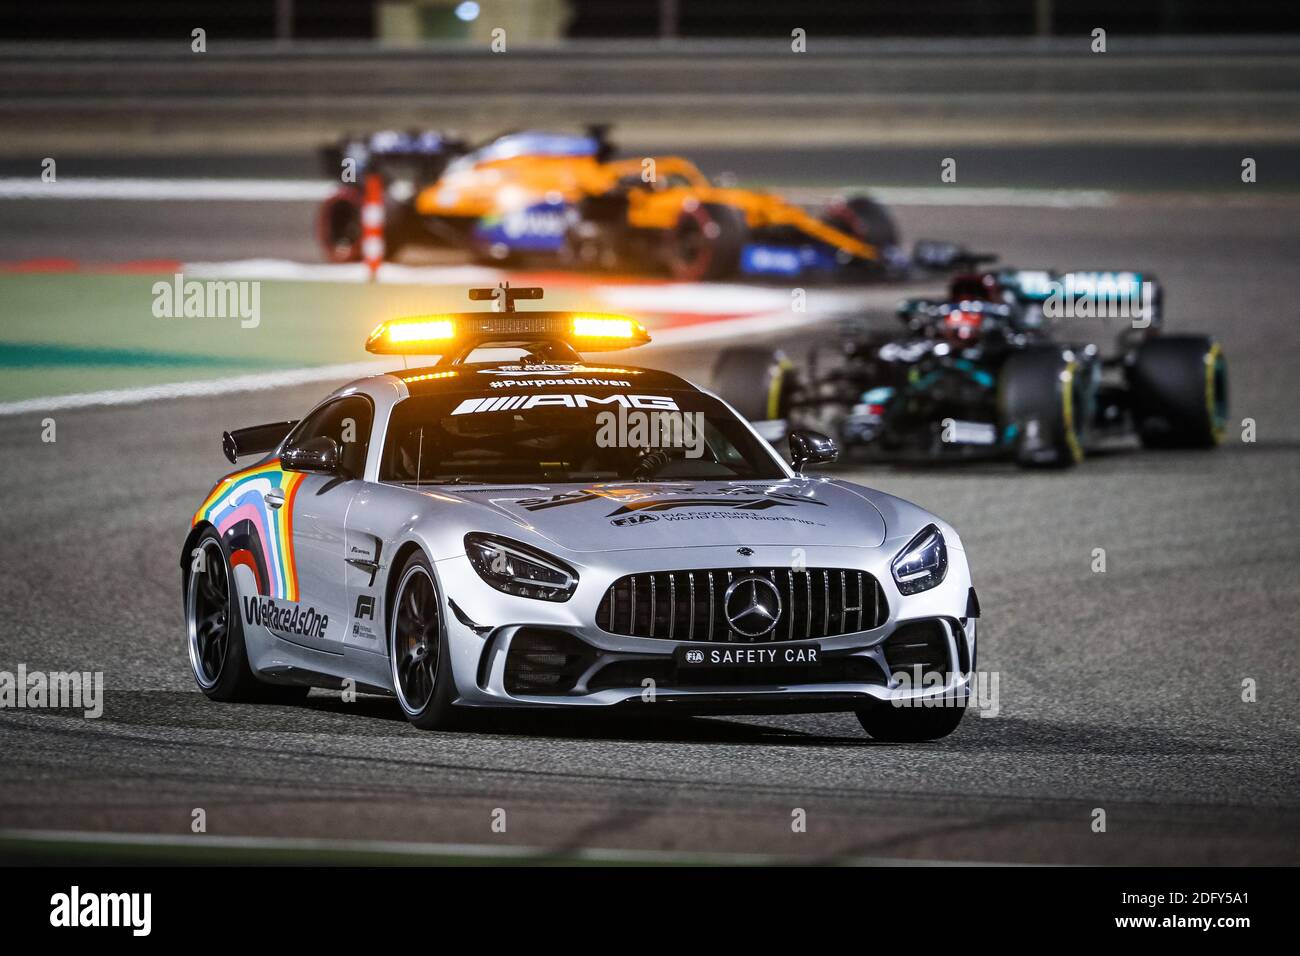 safety car, durante la Formula 1 Rolex Sakhir Grand Prix 2020, dal 4 al 6 dicembre 2020 sul Bahrain International Circui/LM Foto Stock